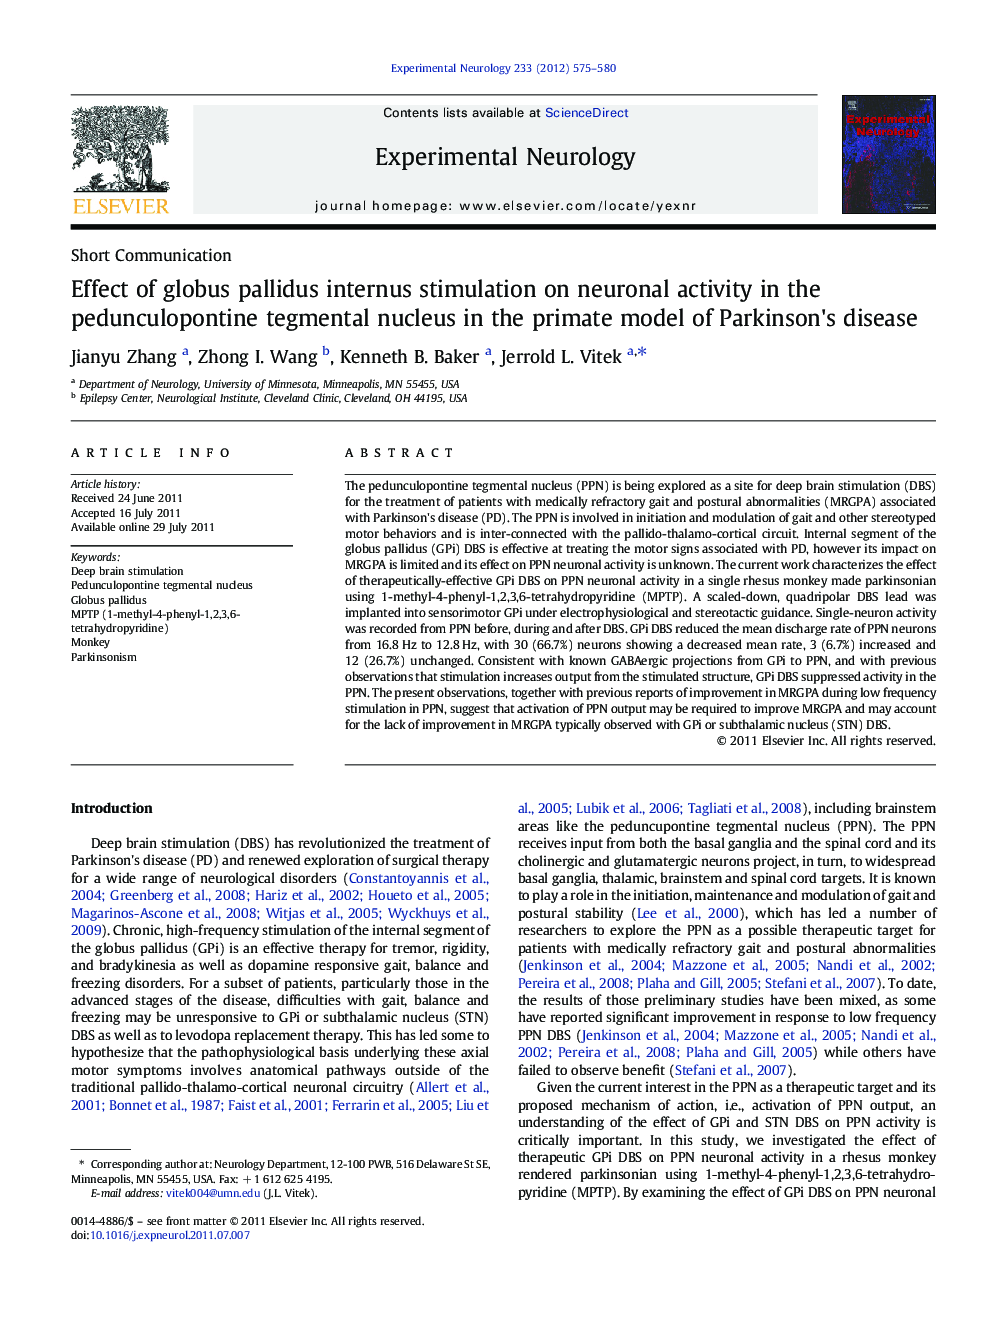 Effect of globus pallidus internus stimulation on neuronal activity in the pedunculopontine tegmental nucleus in the primate model of Parkinson's disease